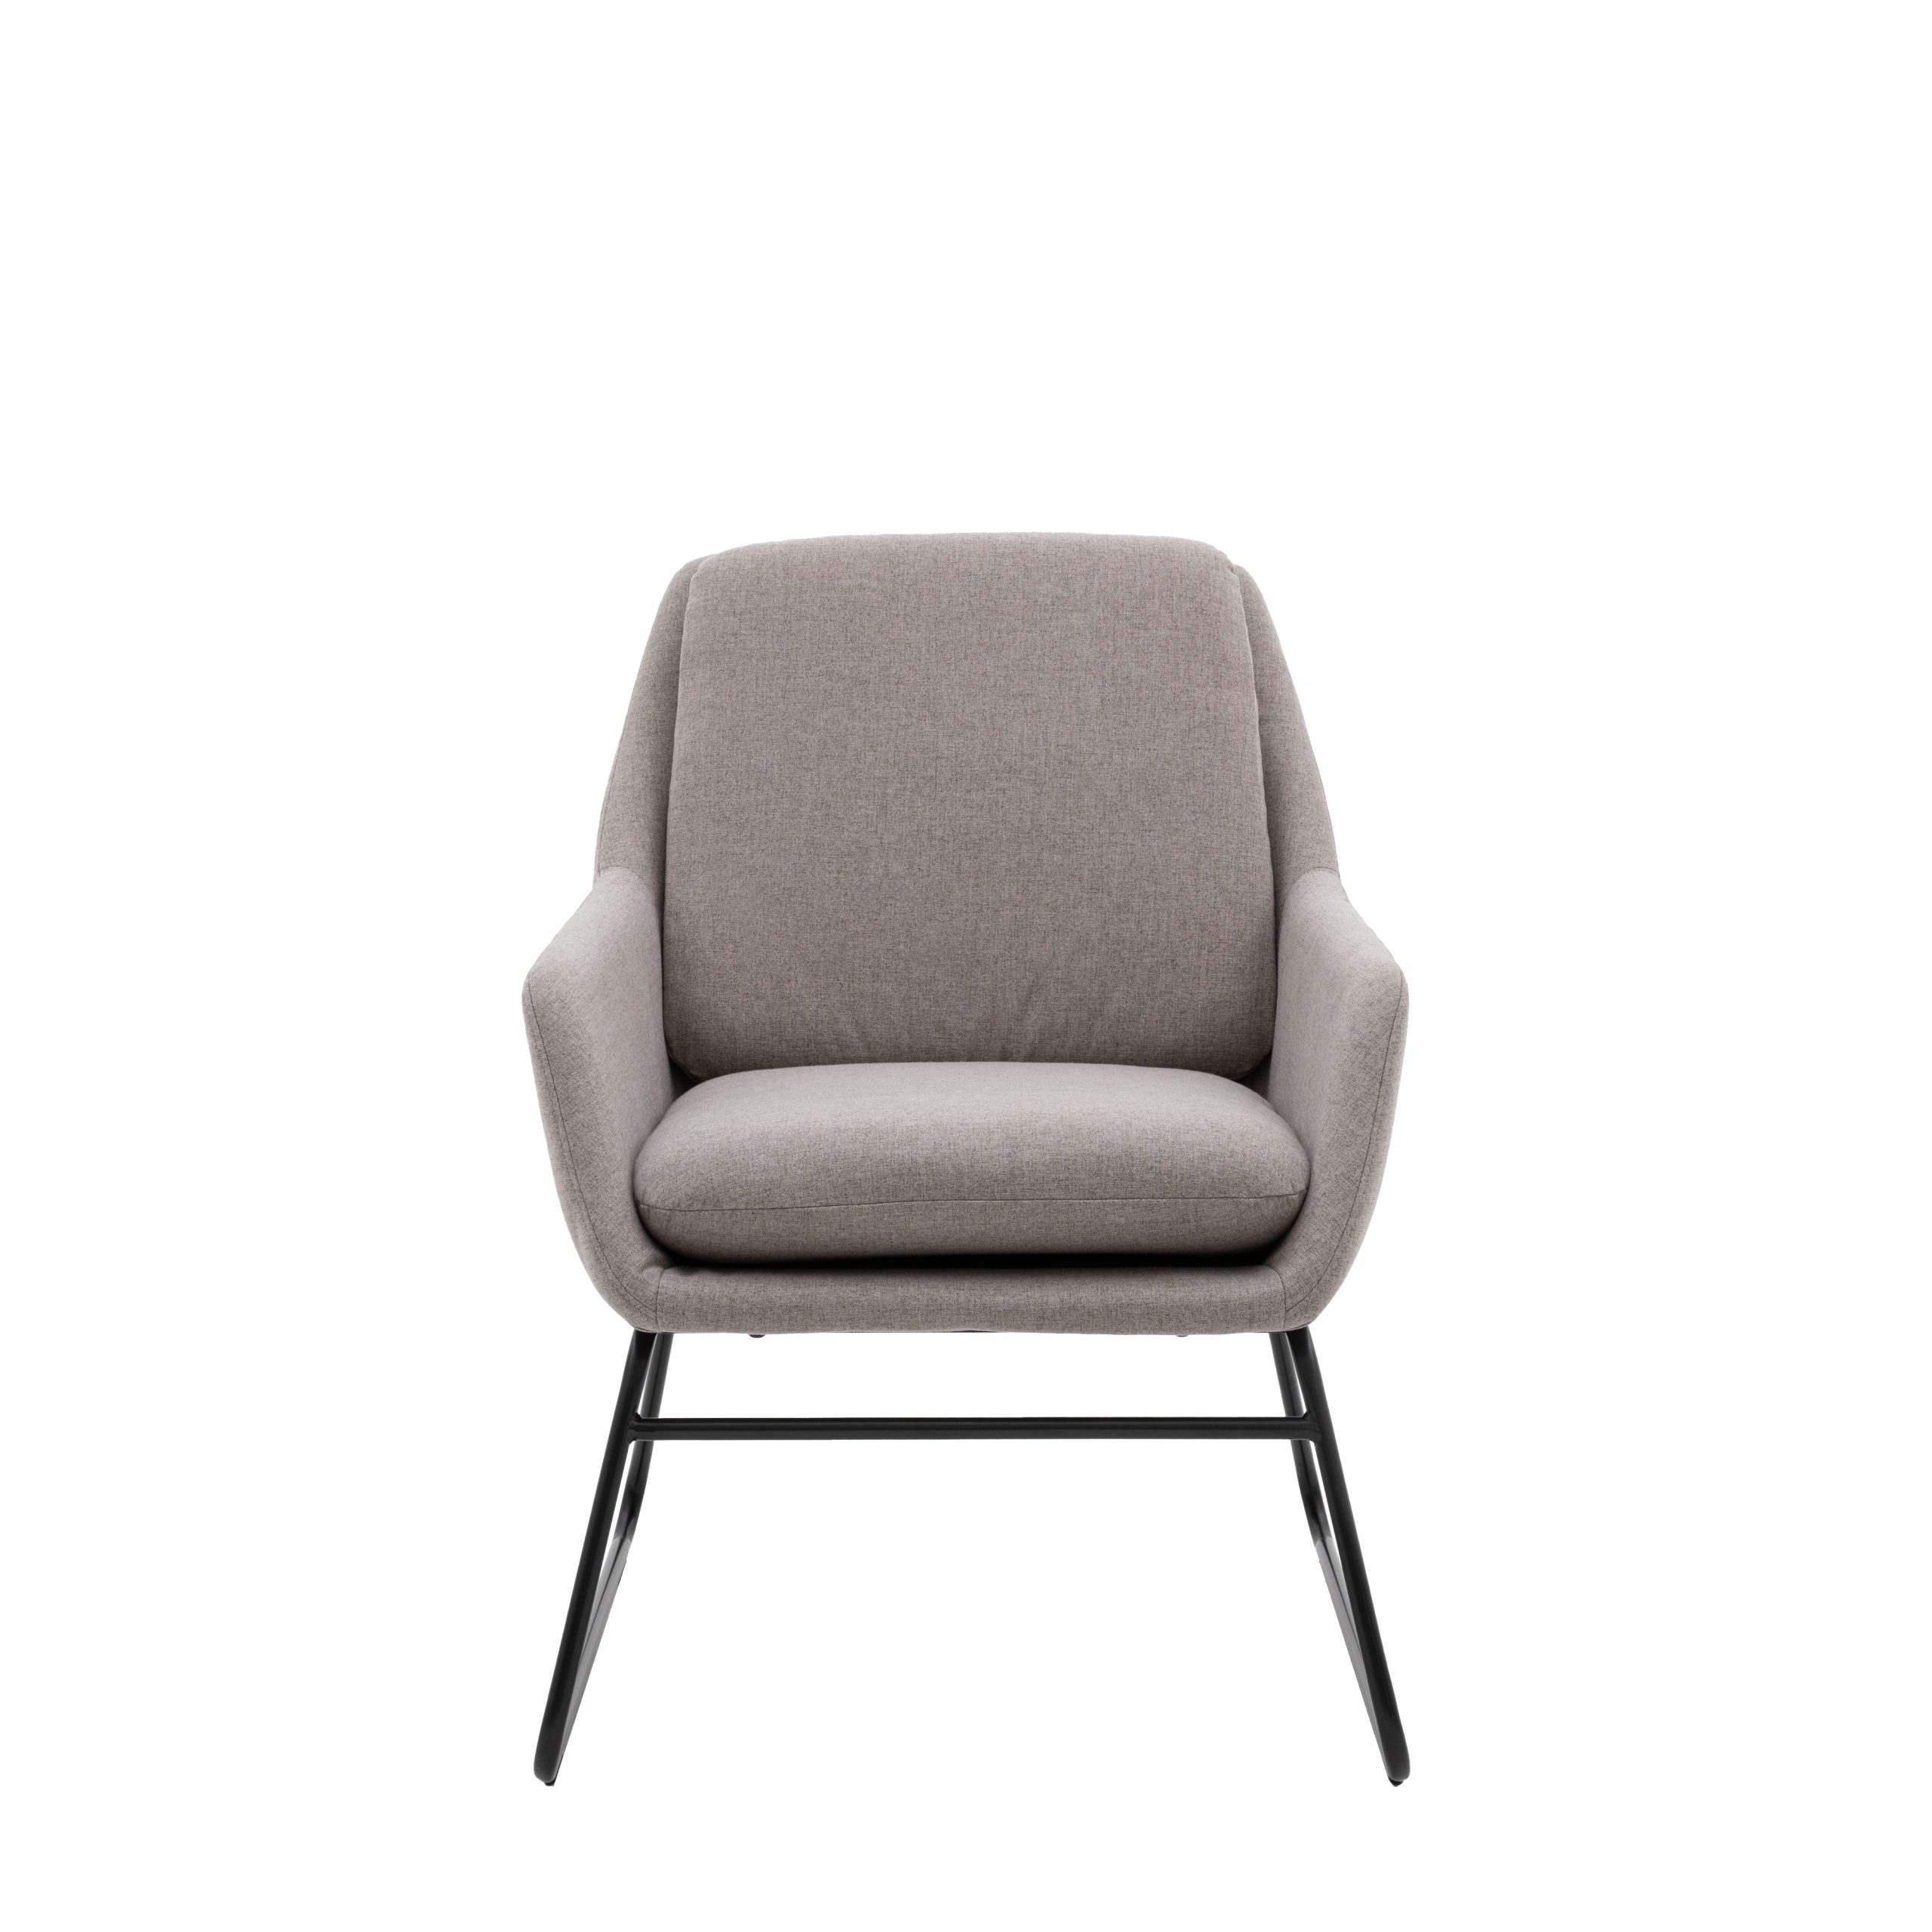 Gallery Direct Funton Chair Light Grey